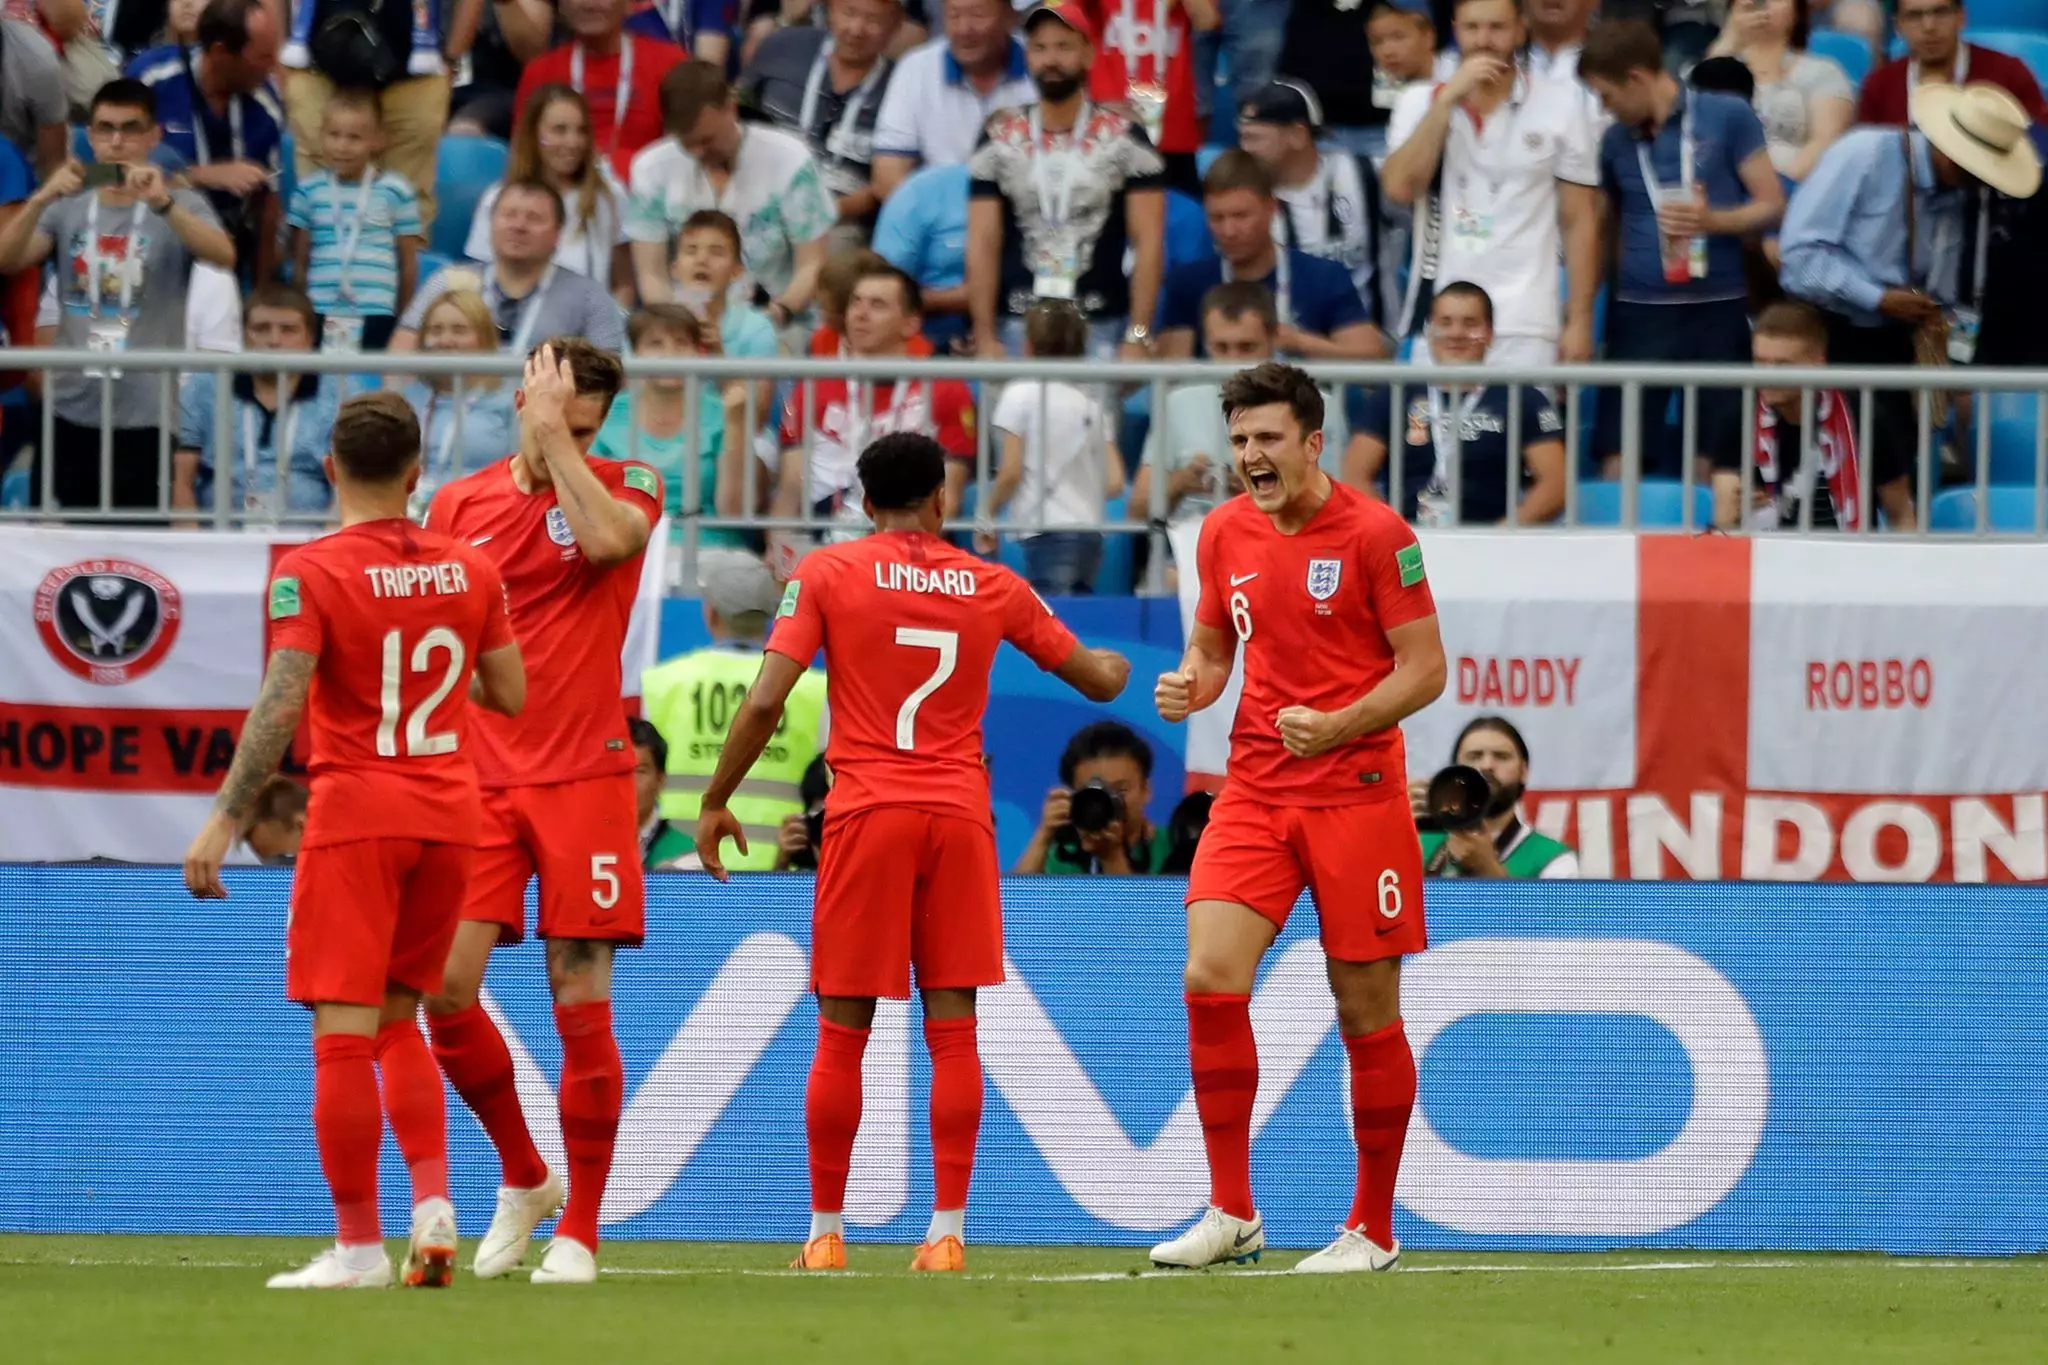 England players celebrate scoring a goal. Image: PA